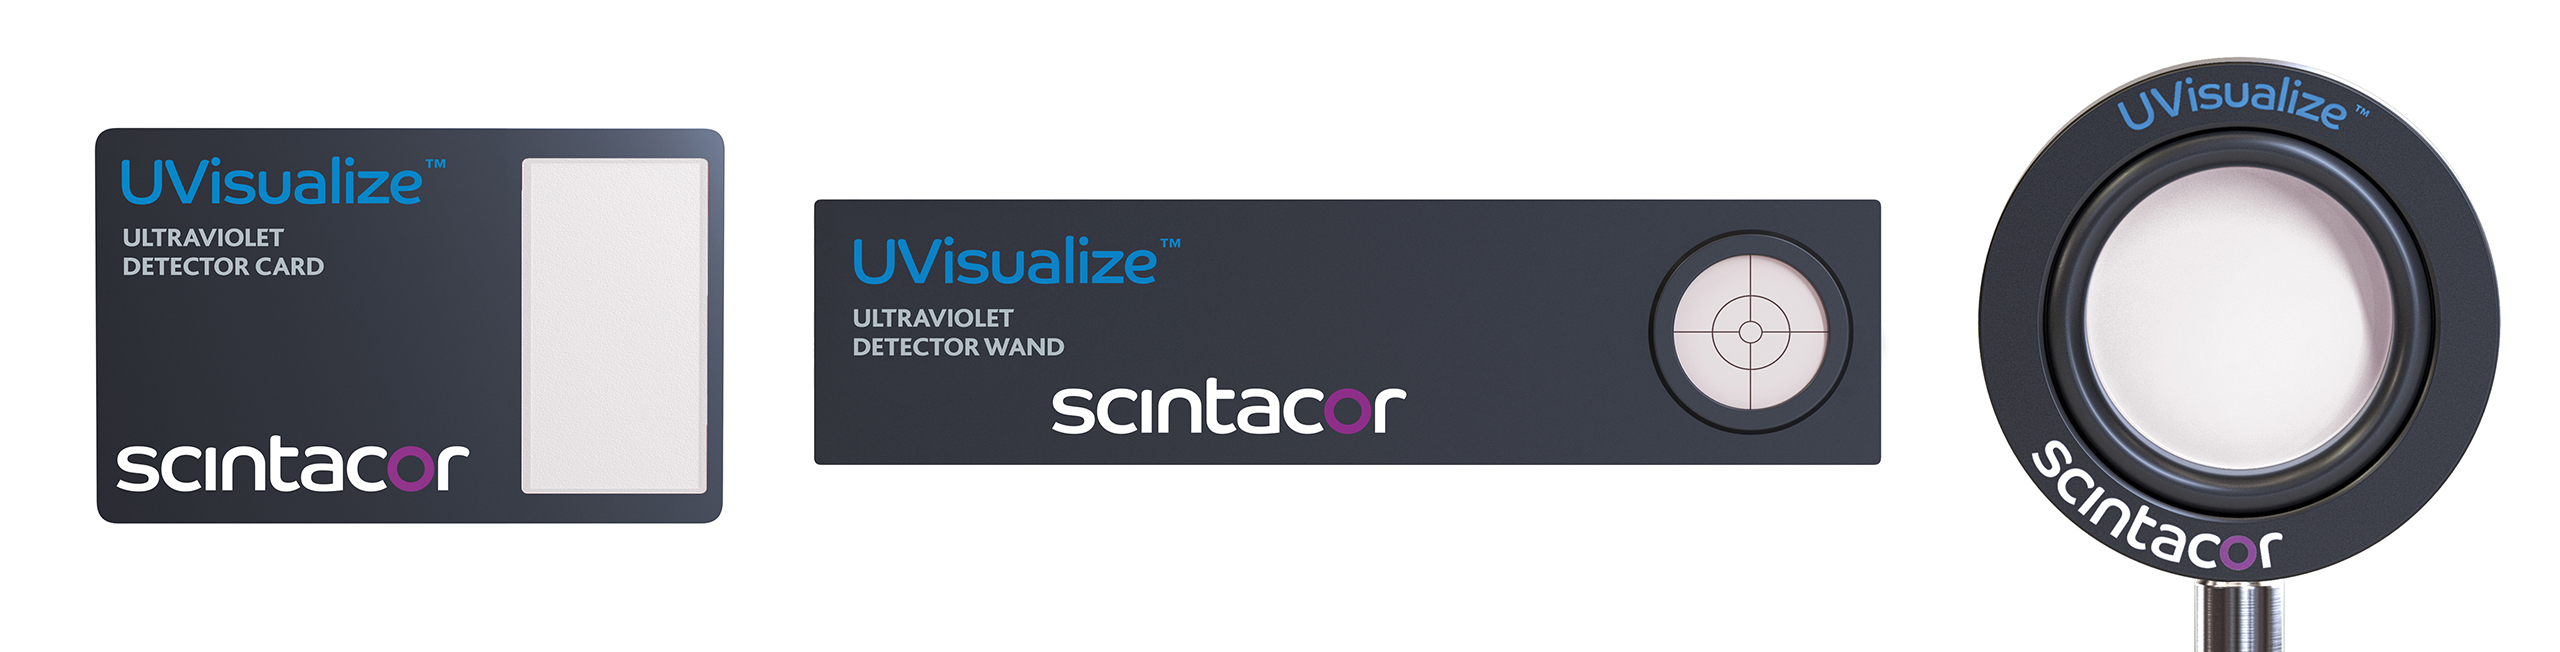 Scintacor_UVisualize_Range_Rev02_2560x652